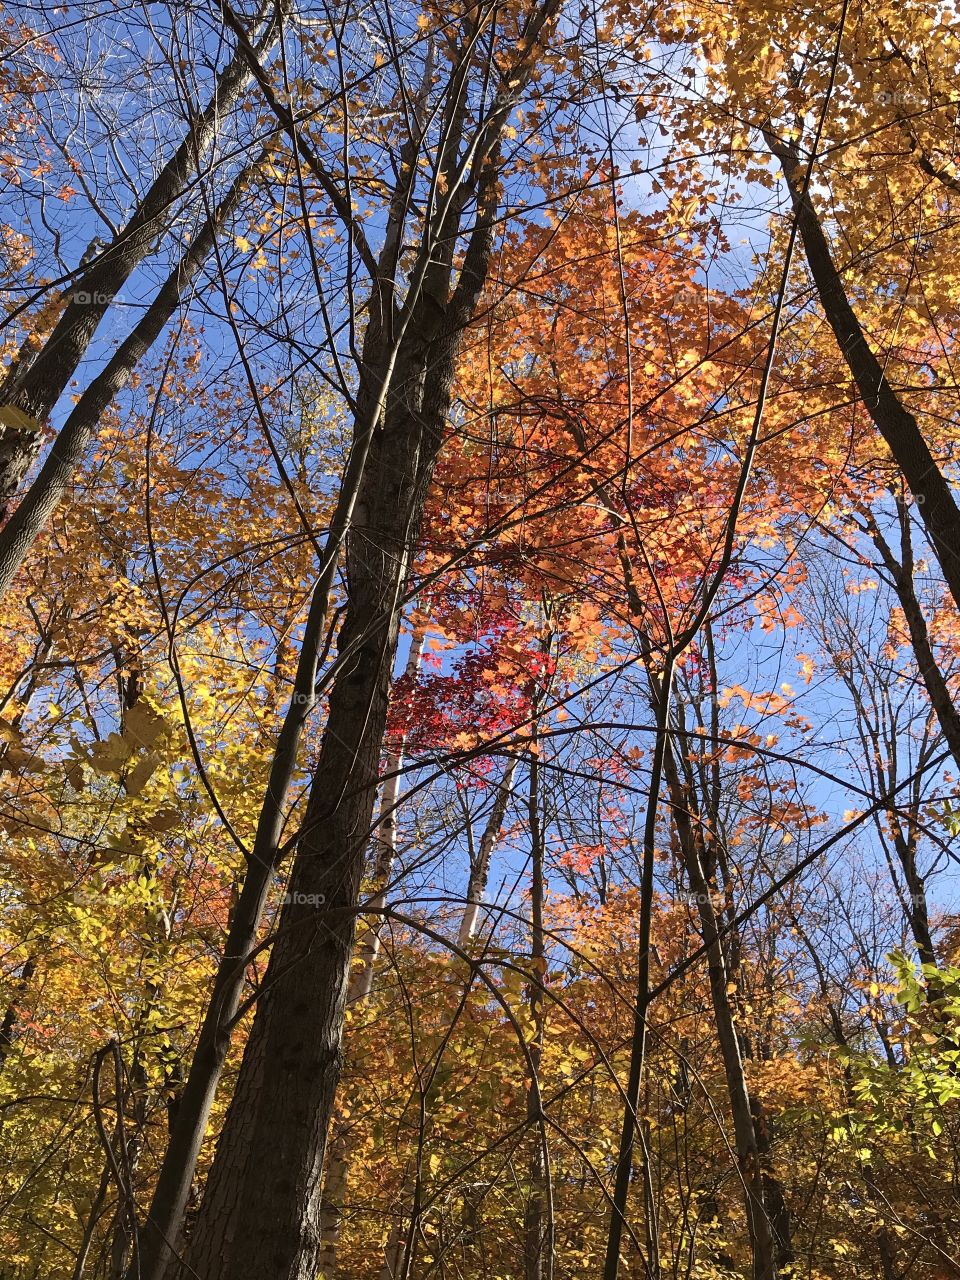 Autumn Woods
